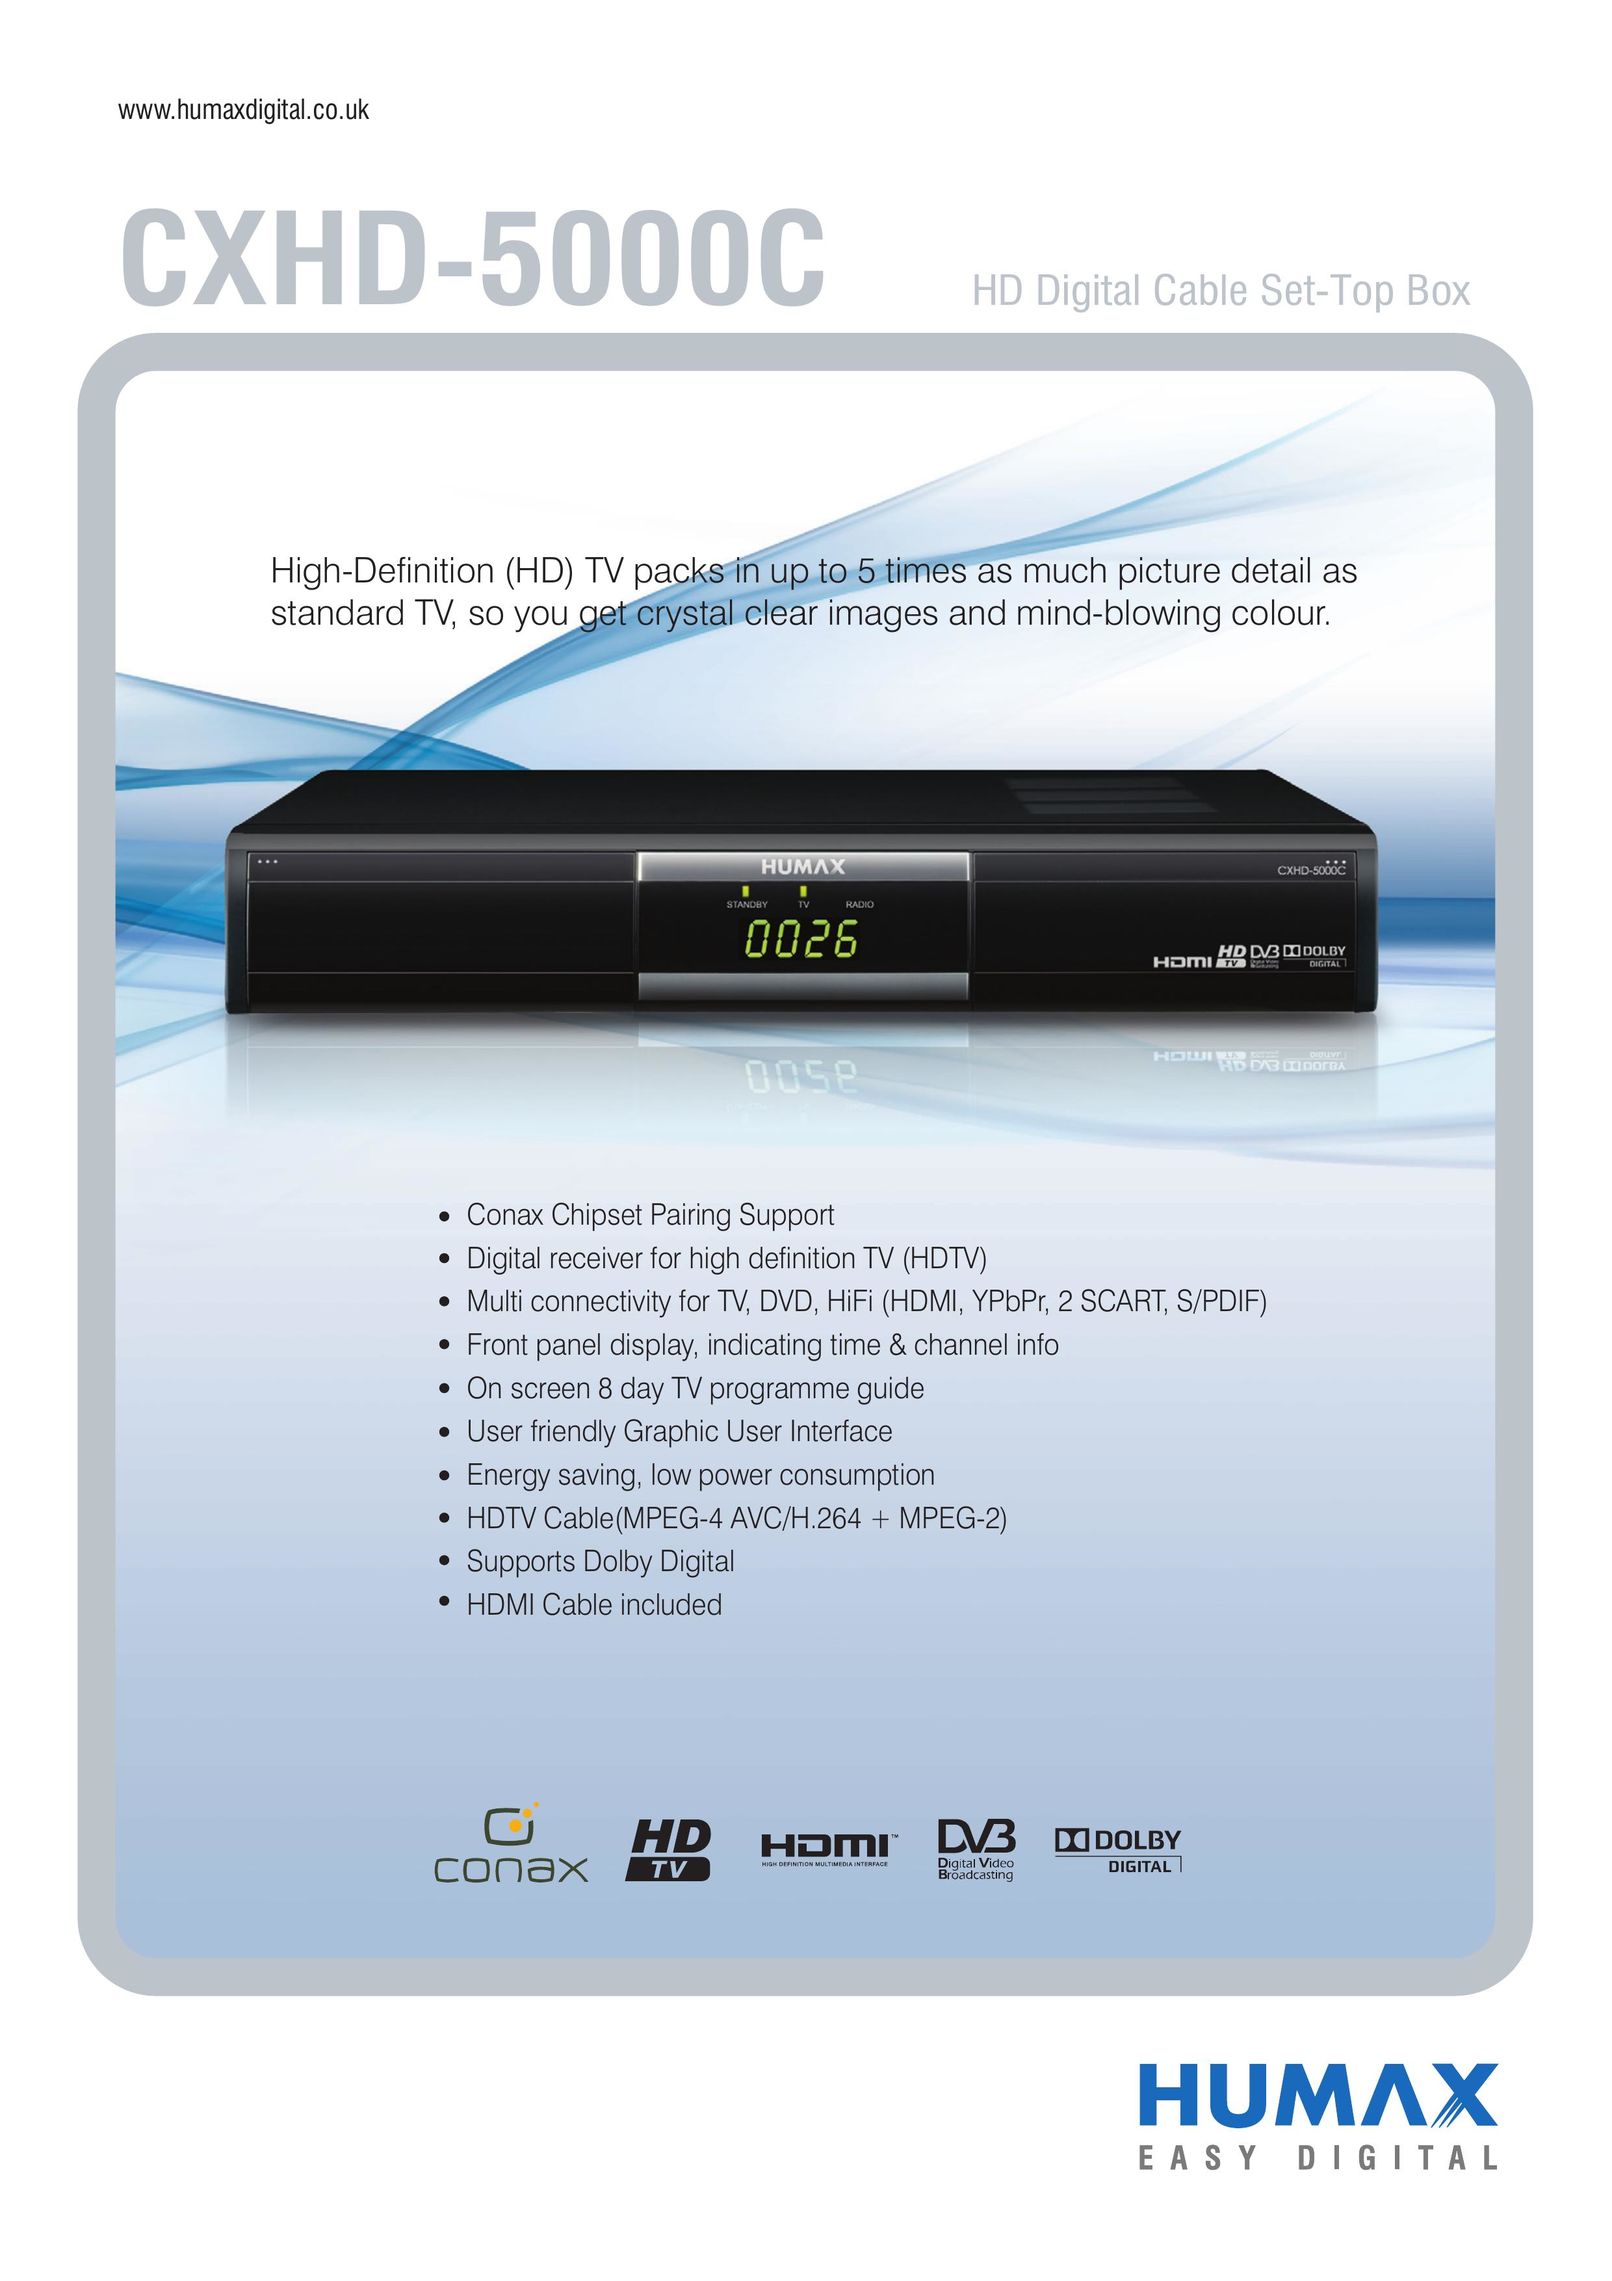 Humax CXHD-5000C DVR User Manual